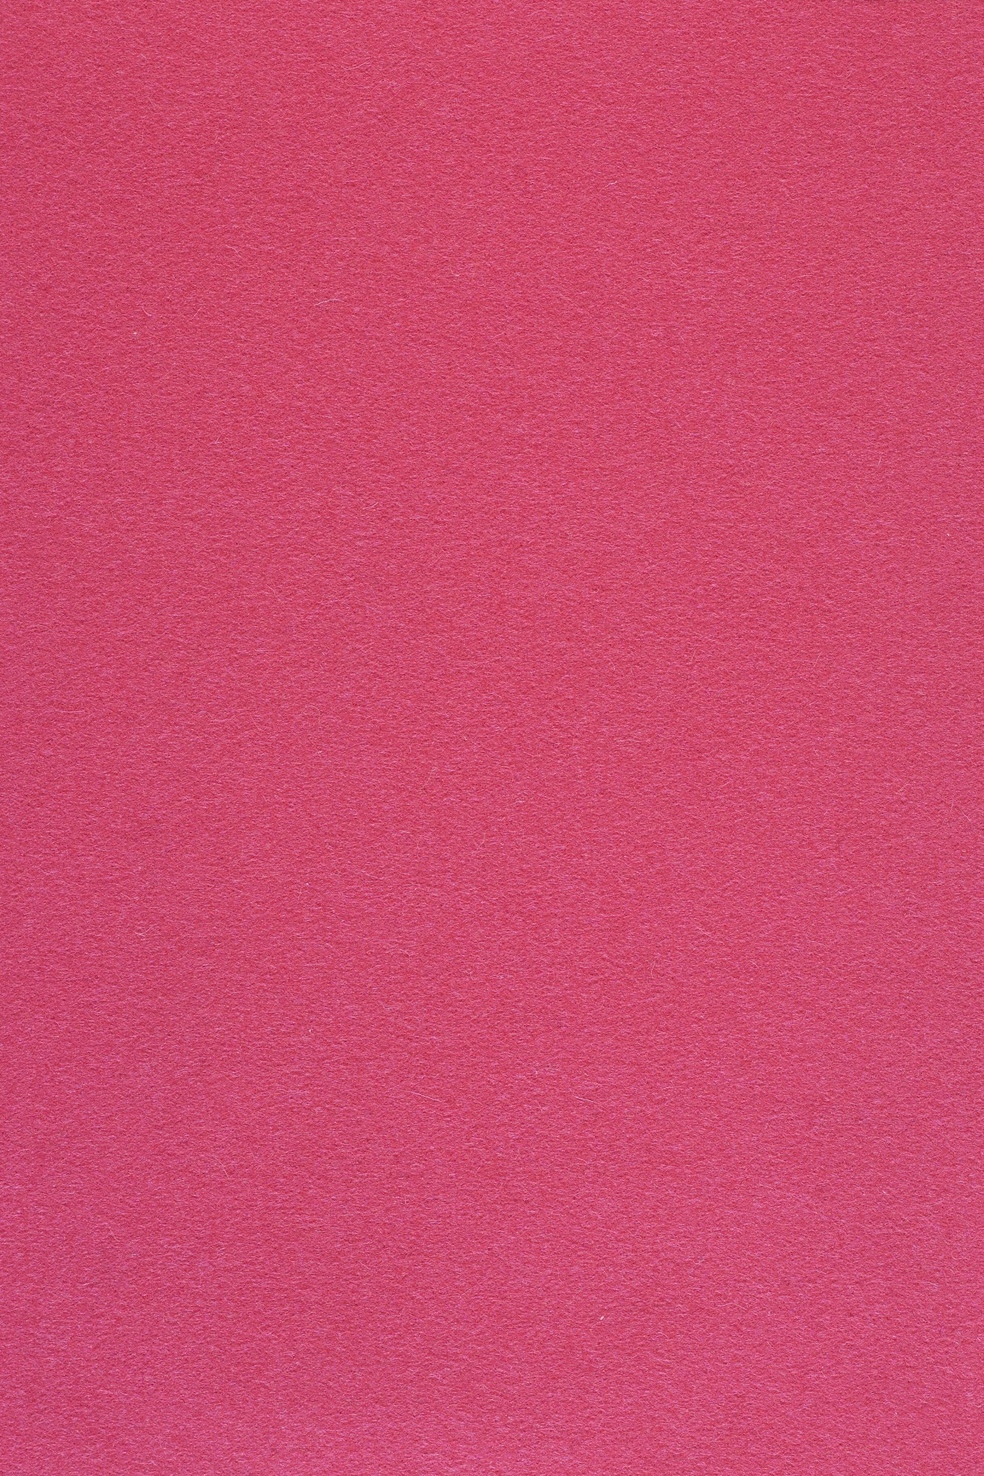 Fabric sample Divina 3 626 pink